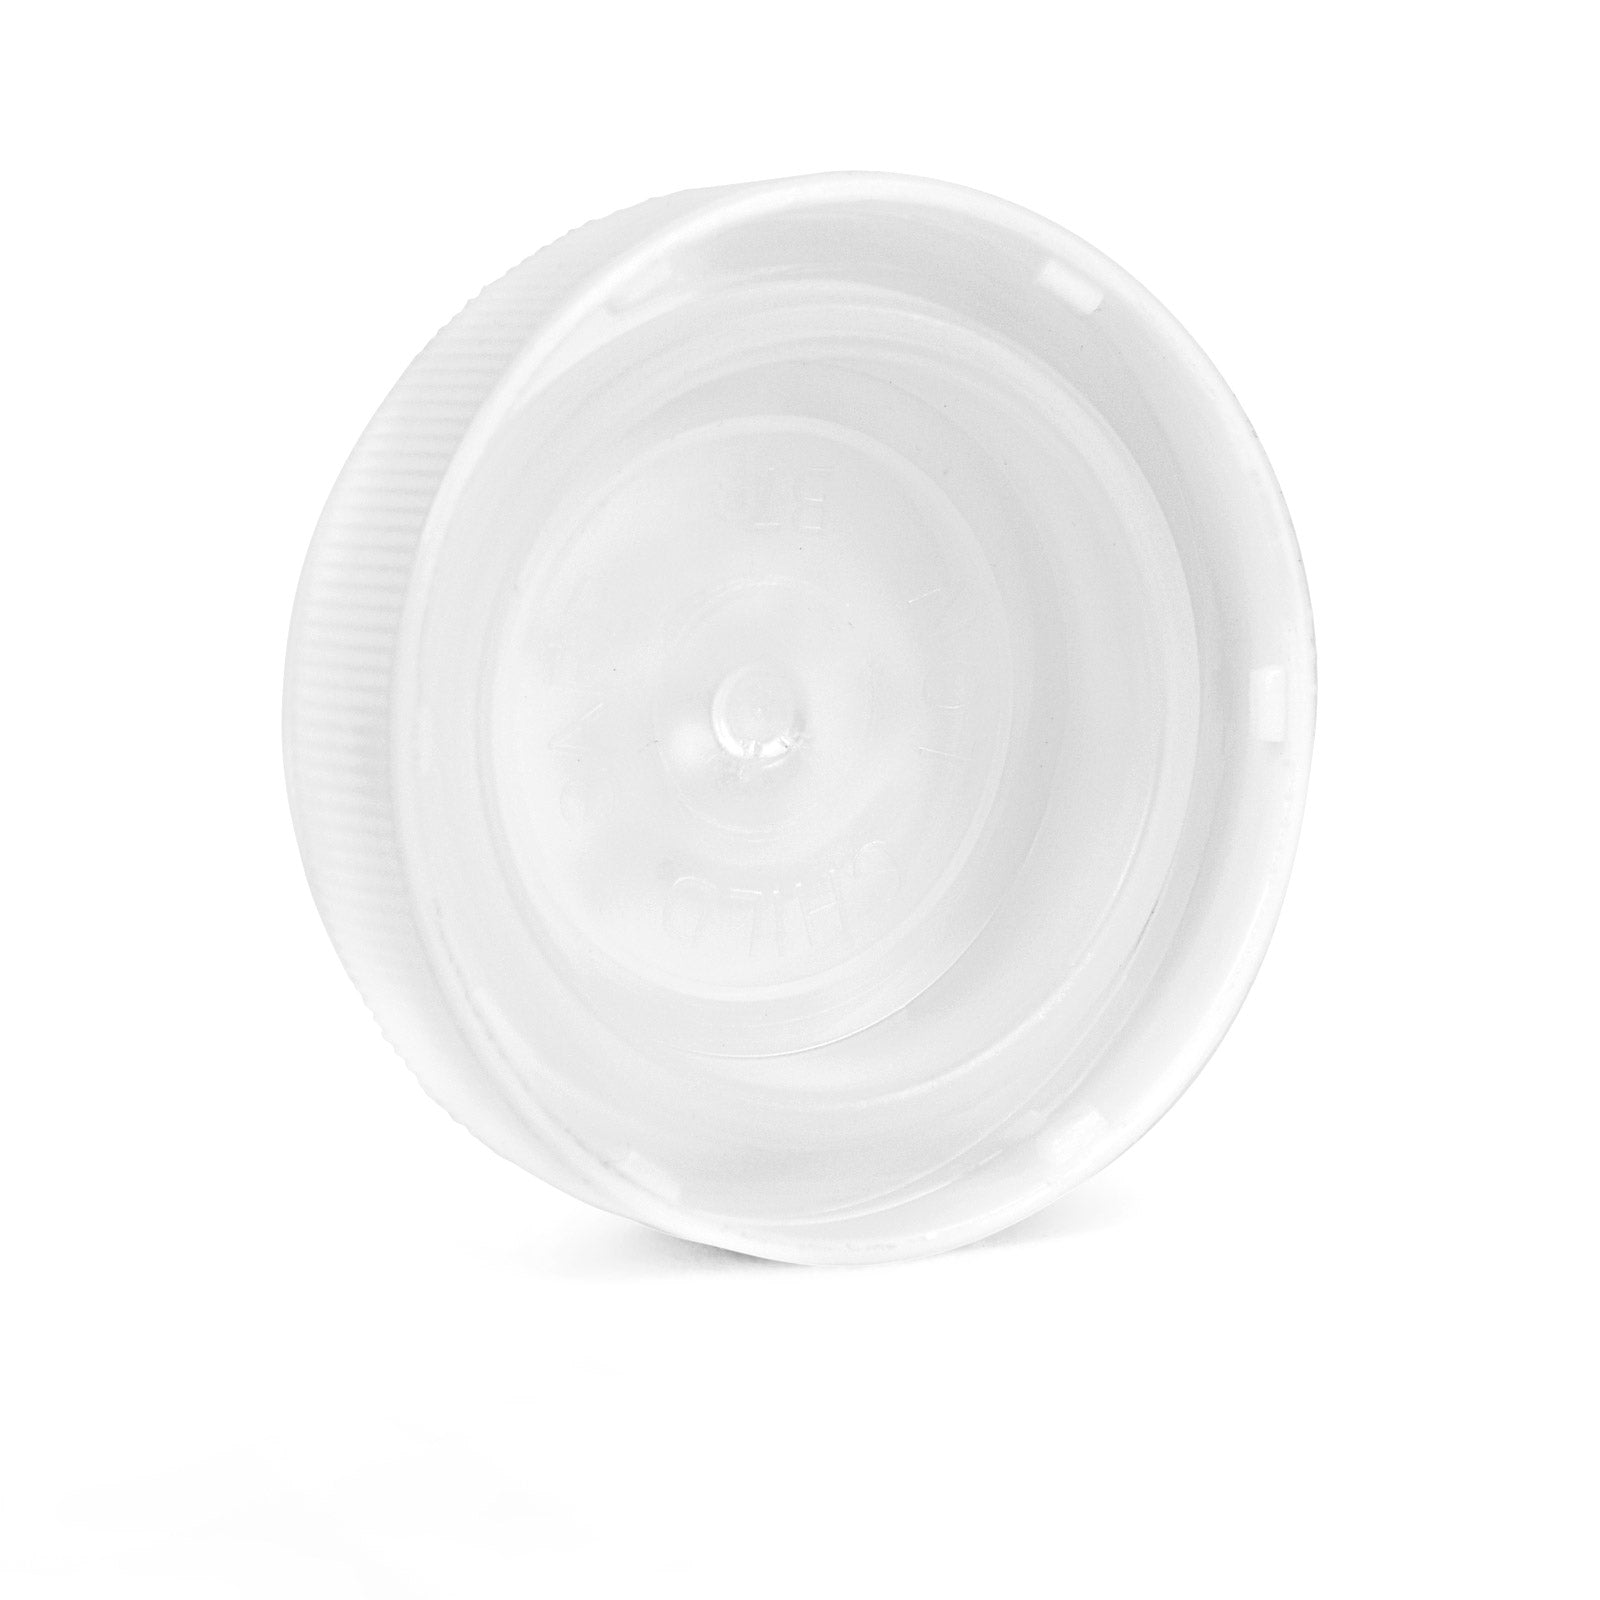 30 Dram Reversible Cap Opaque White - 190 Count